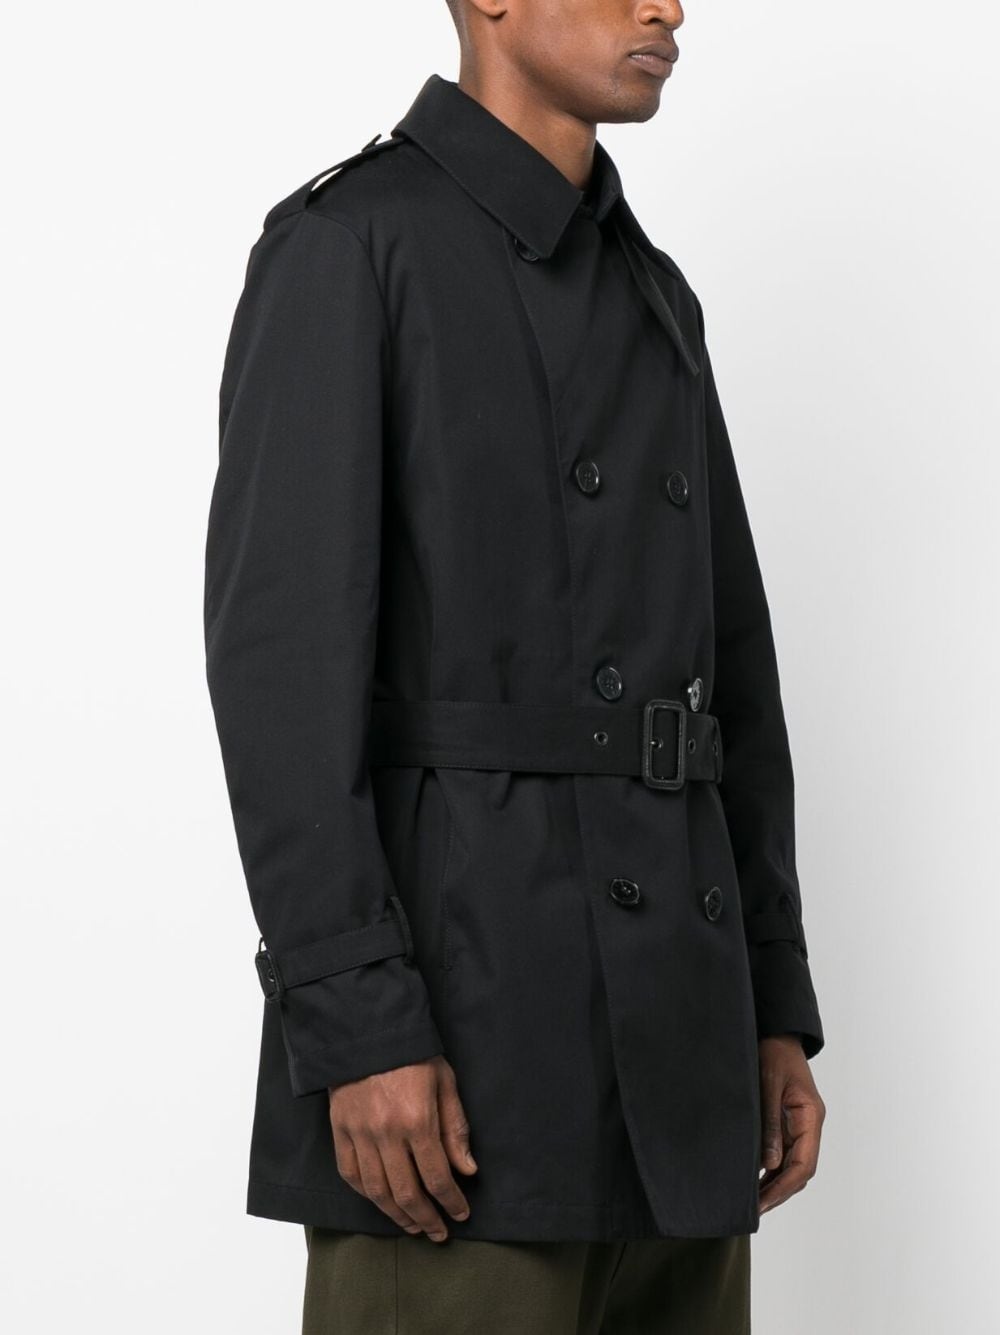 St John cotton trench coat - 3